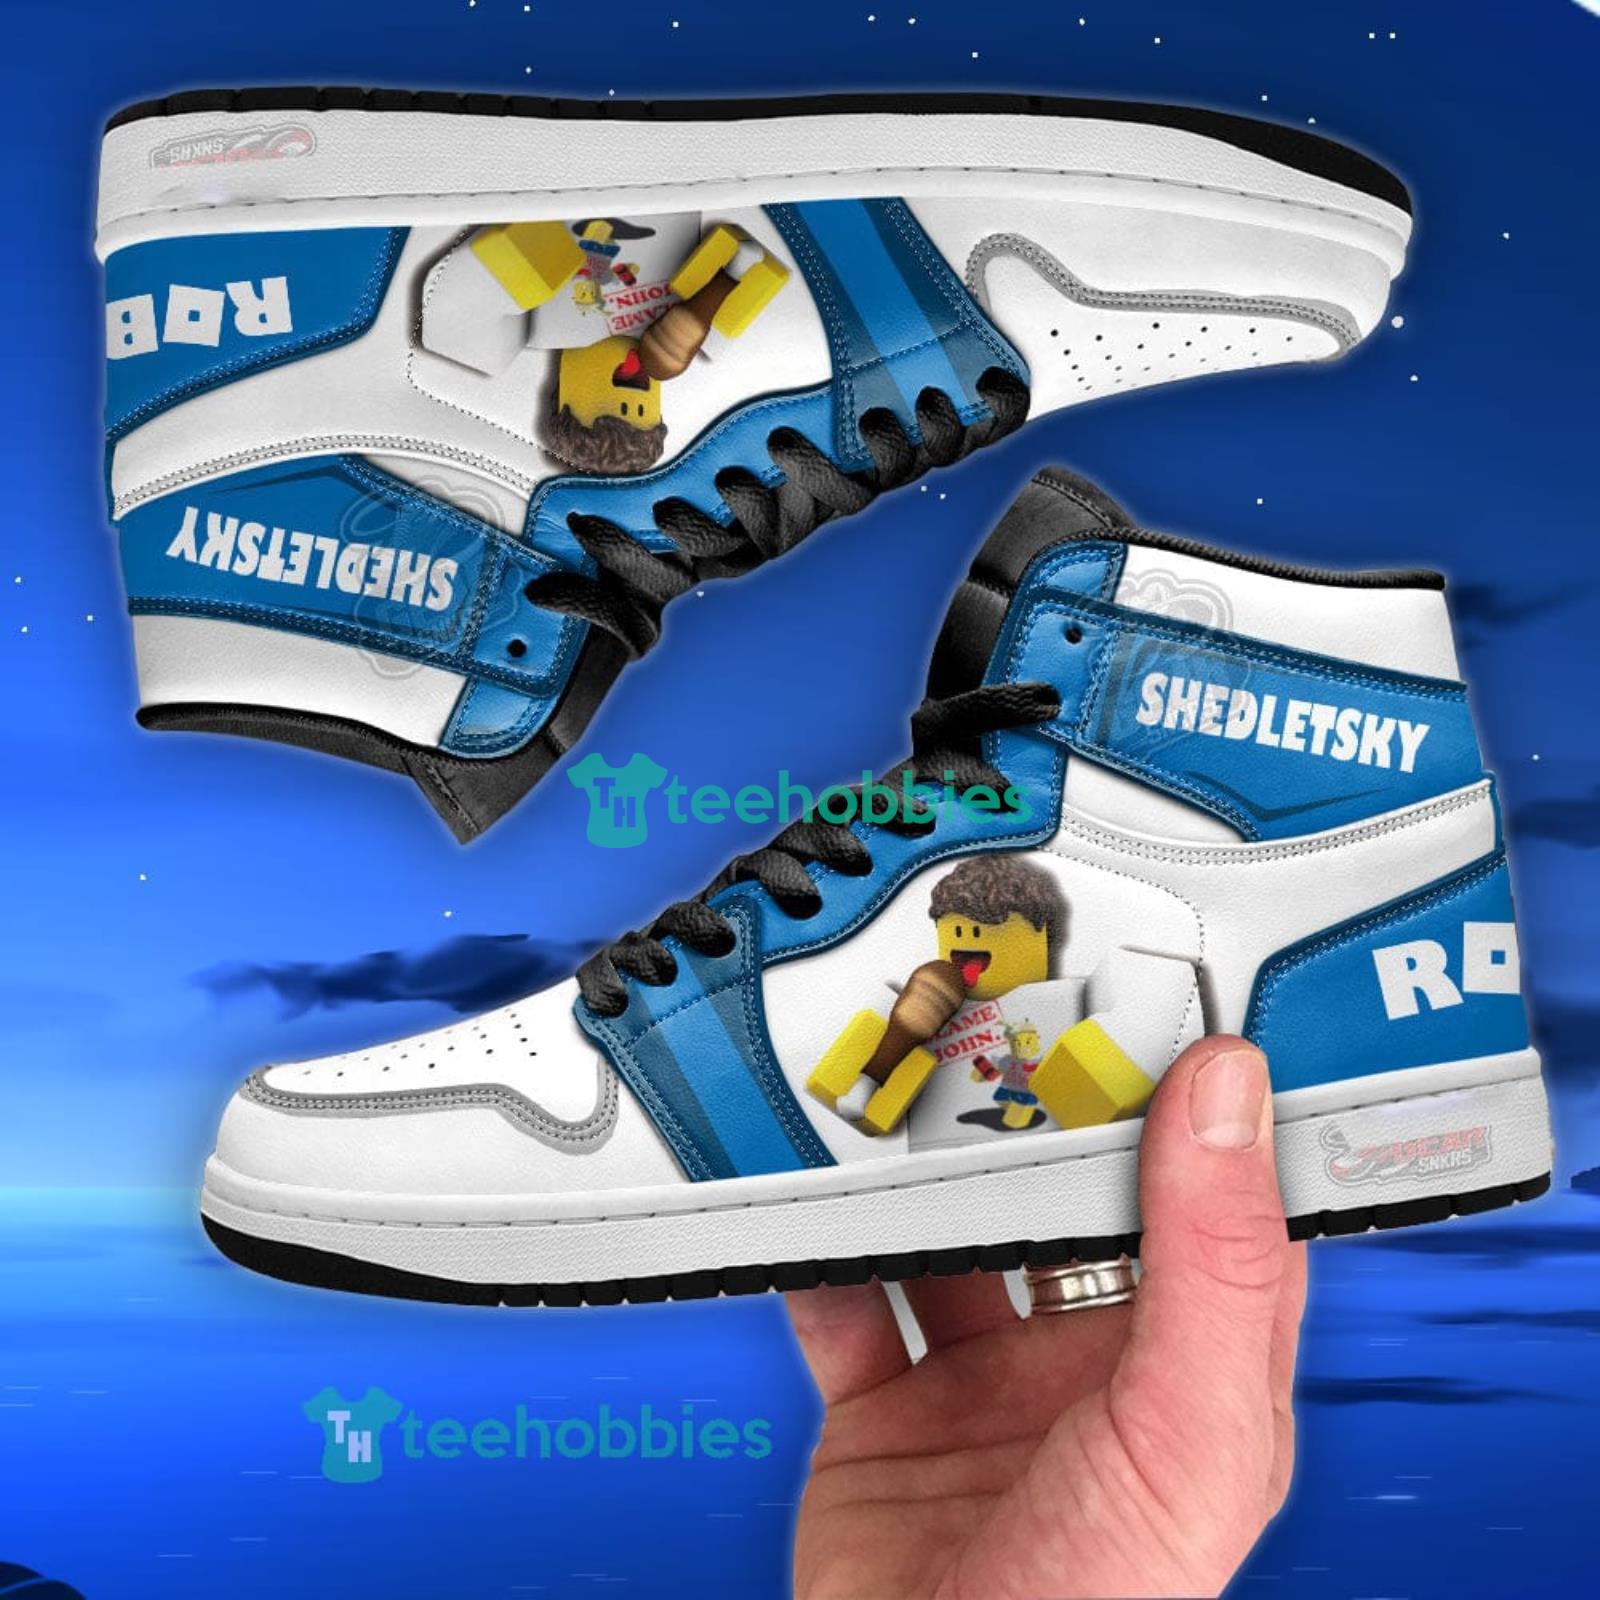 Shedletsky Roblox Air Jordan Hightop Shoes Sneakers For Men And Women